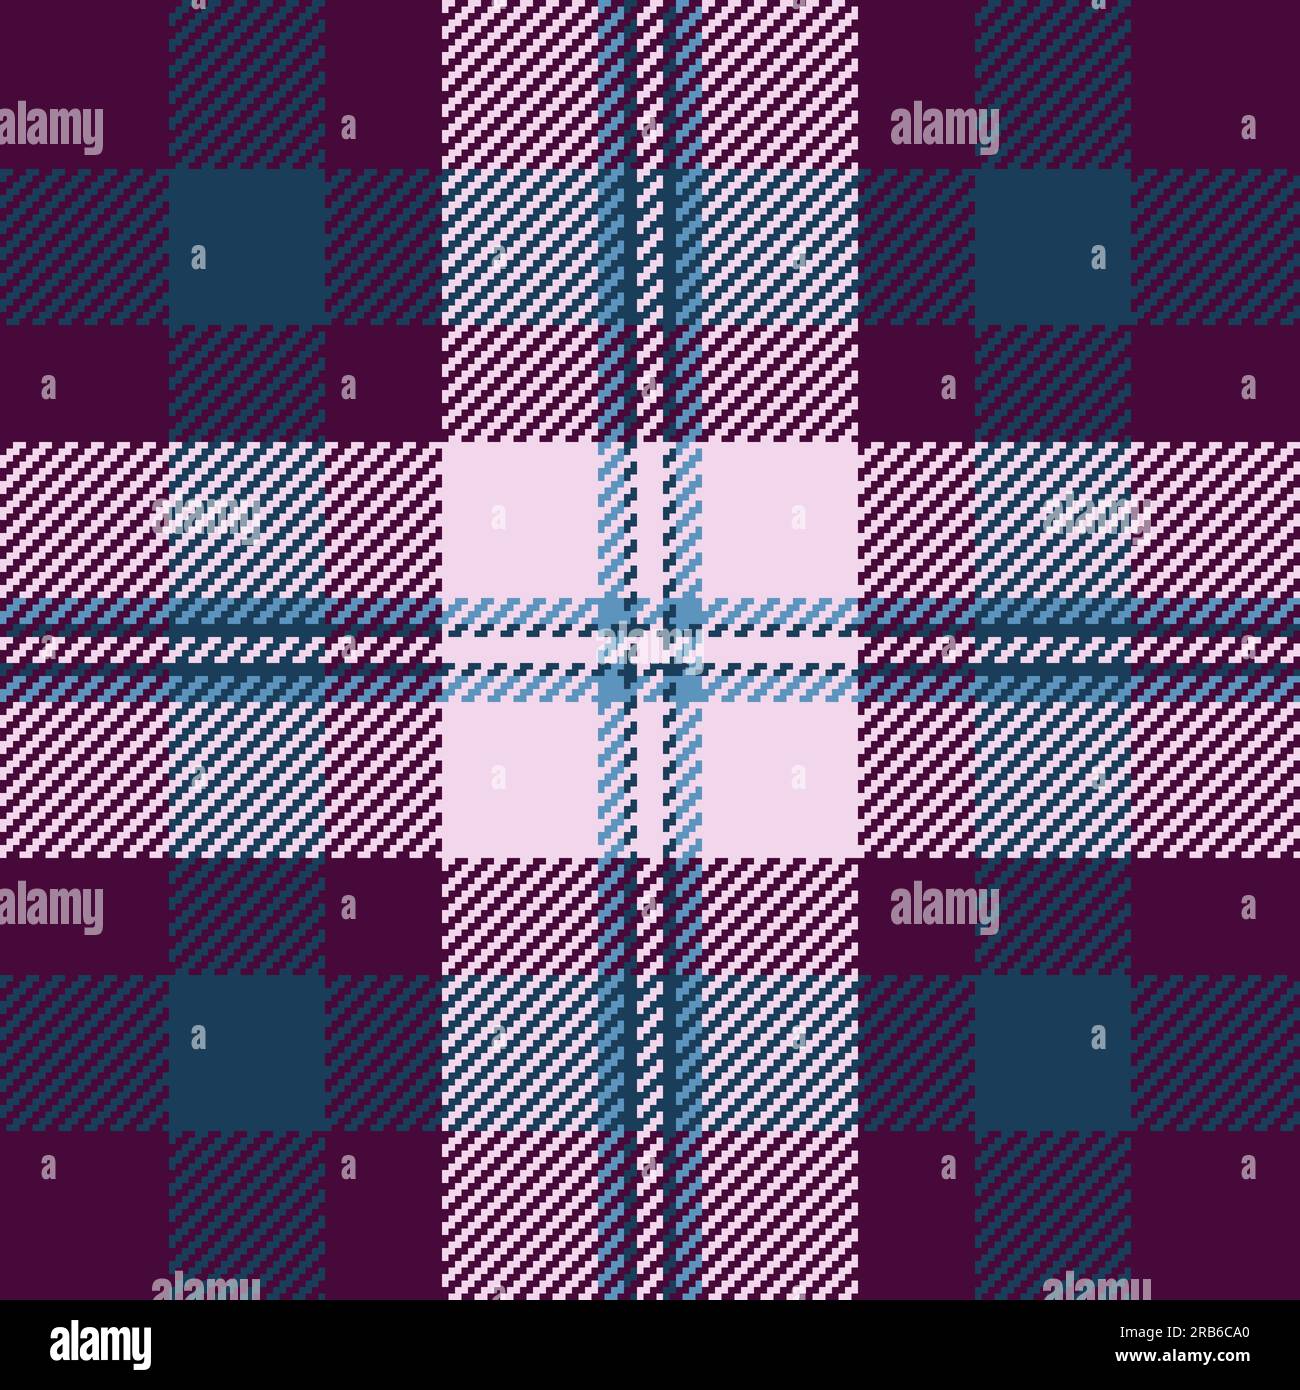 Tartan plaid pattern background. Seamless multicolored dark check